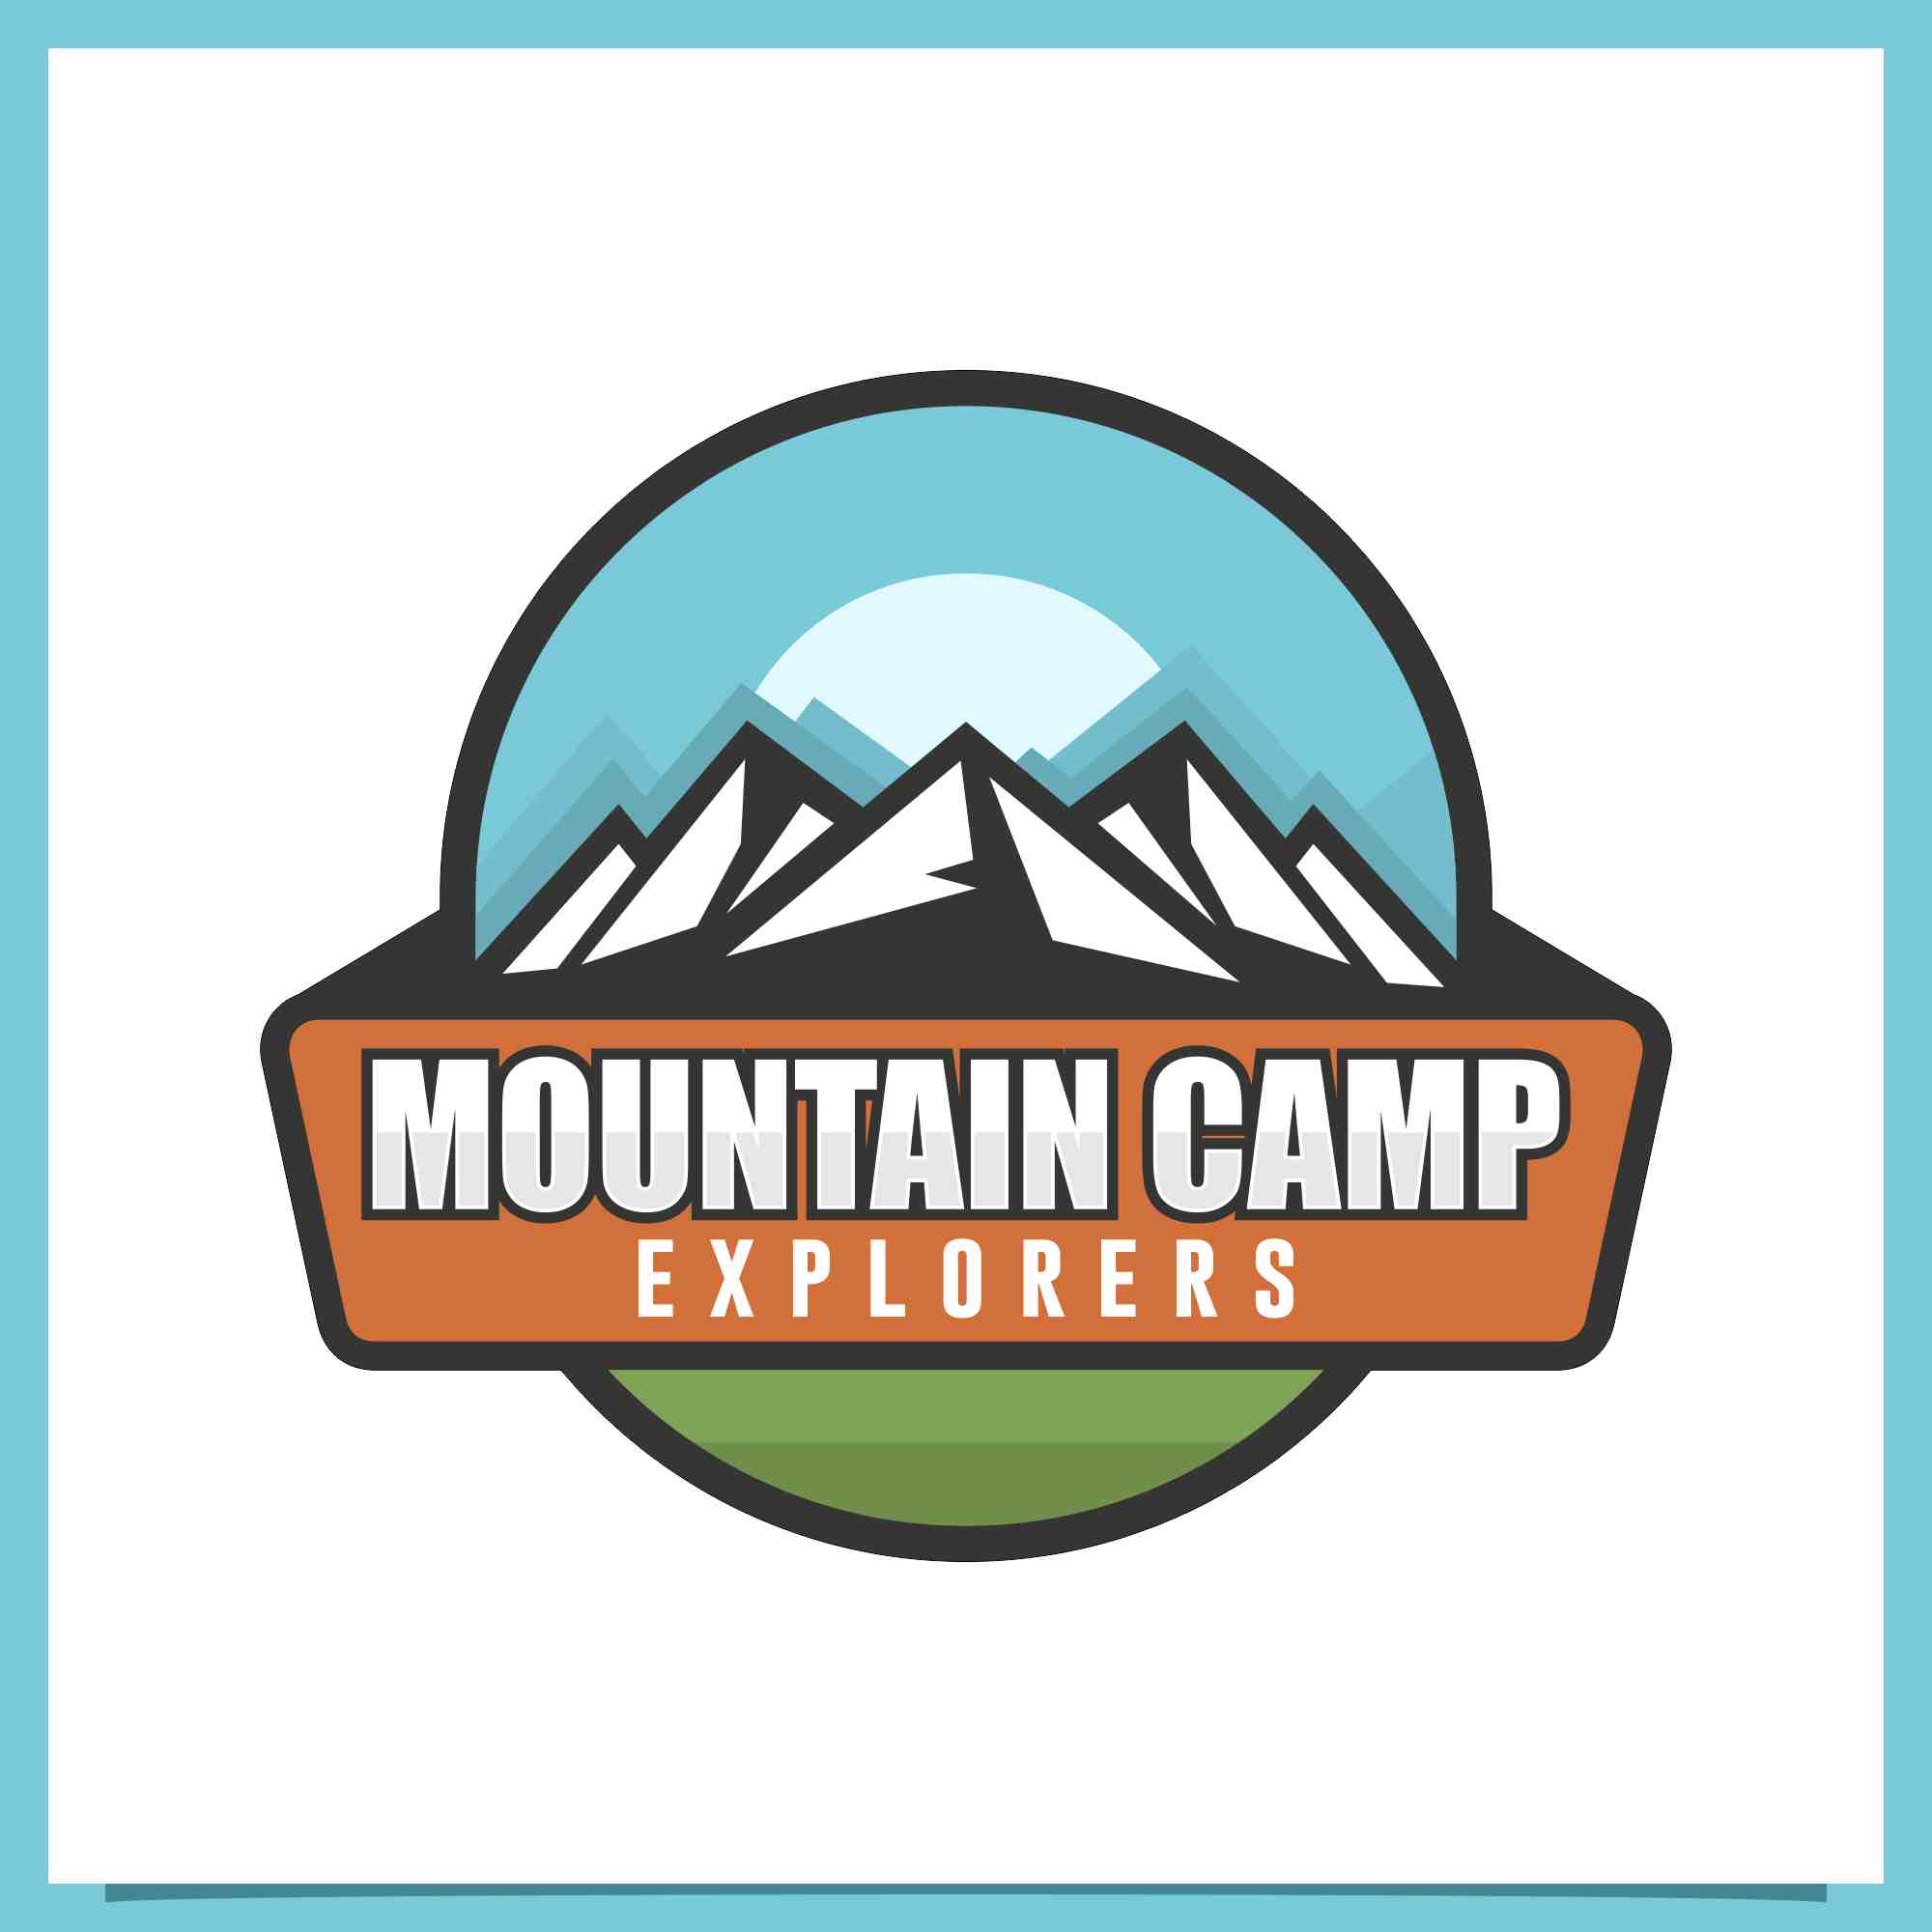 Set Camping outdoor adventure logo design - $4 preview image.